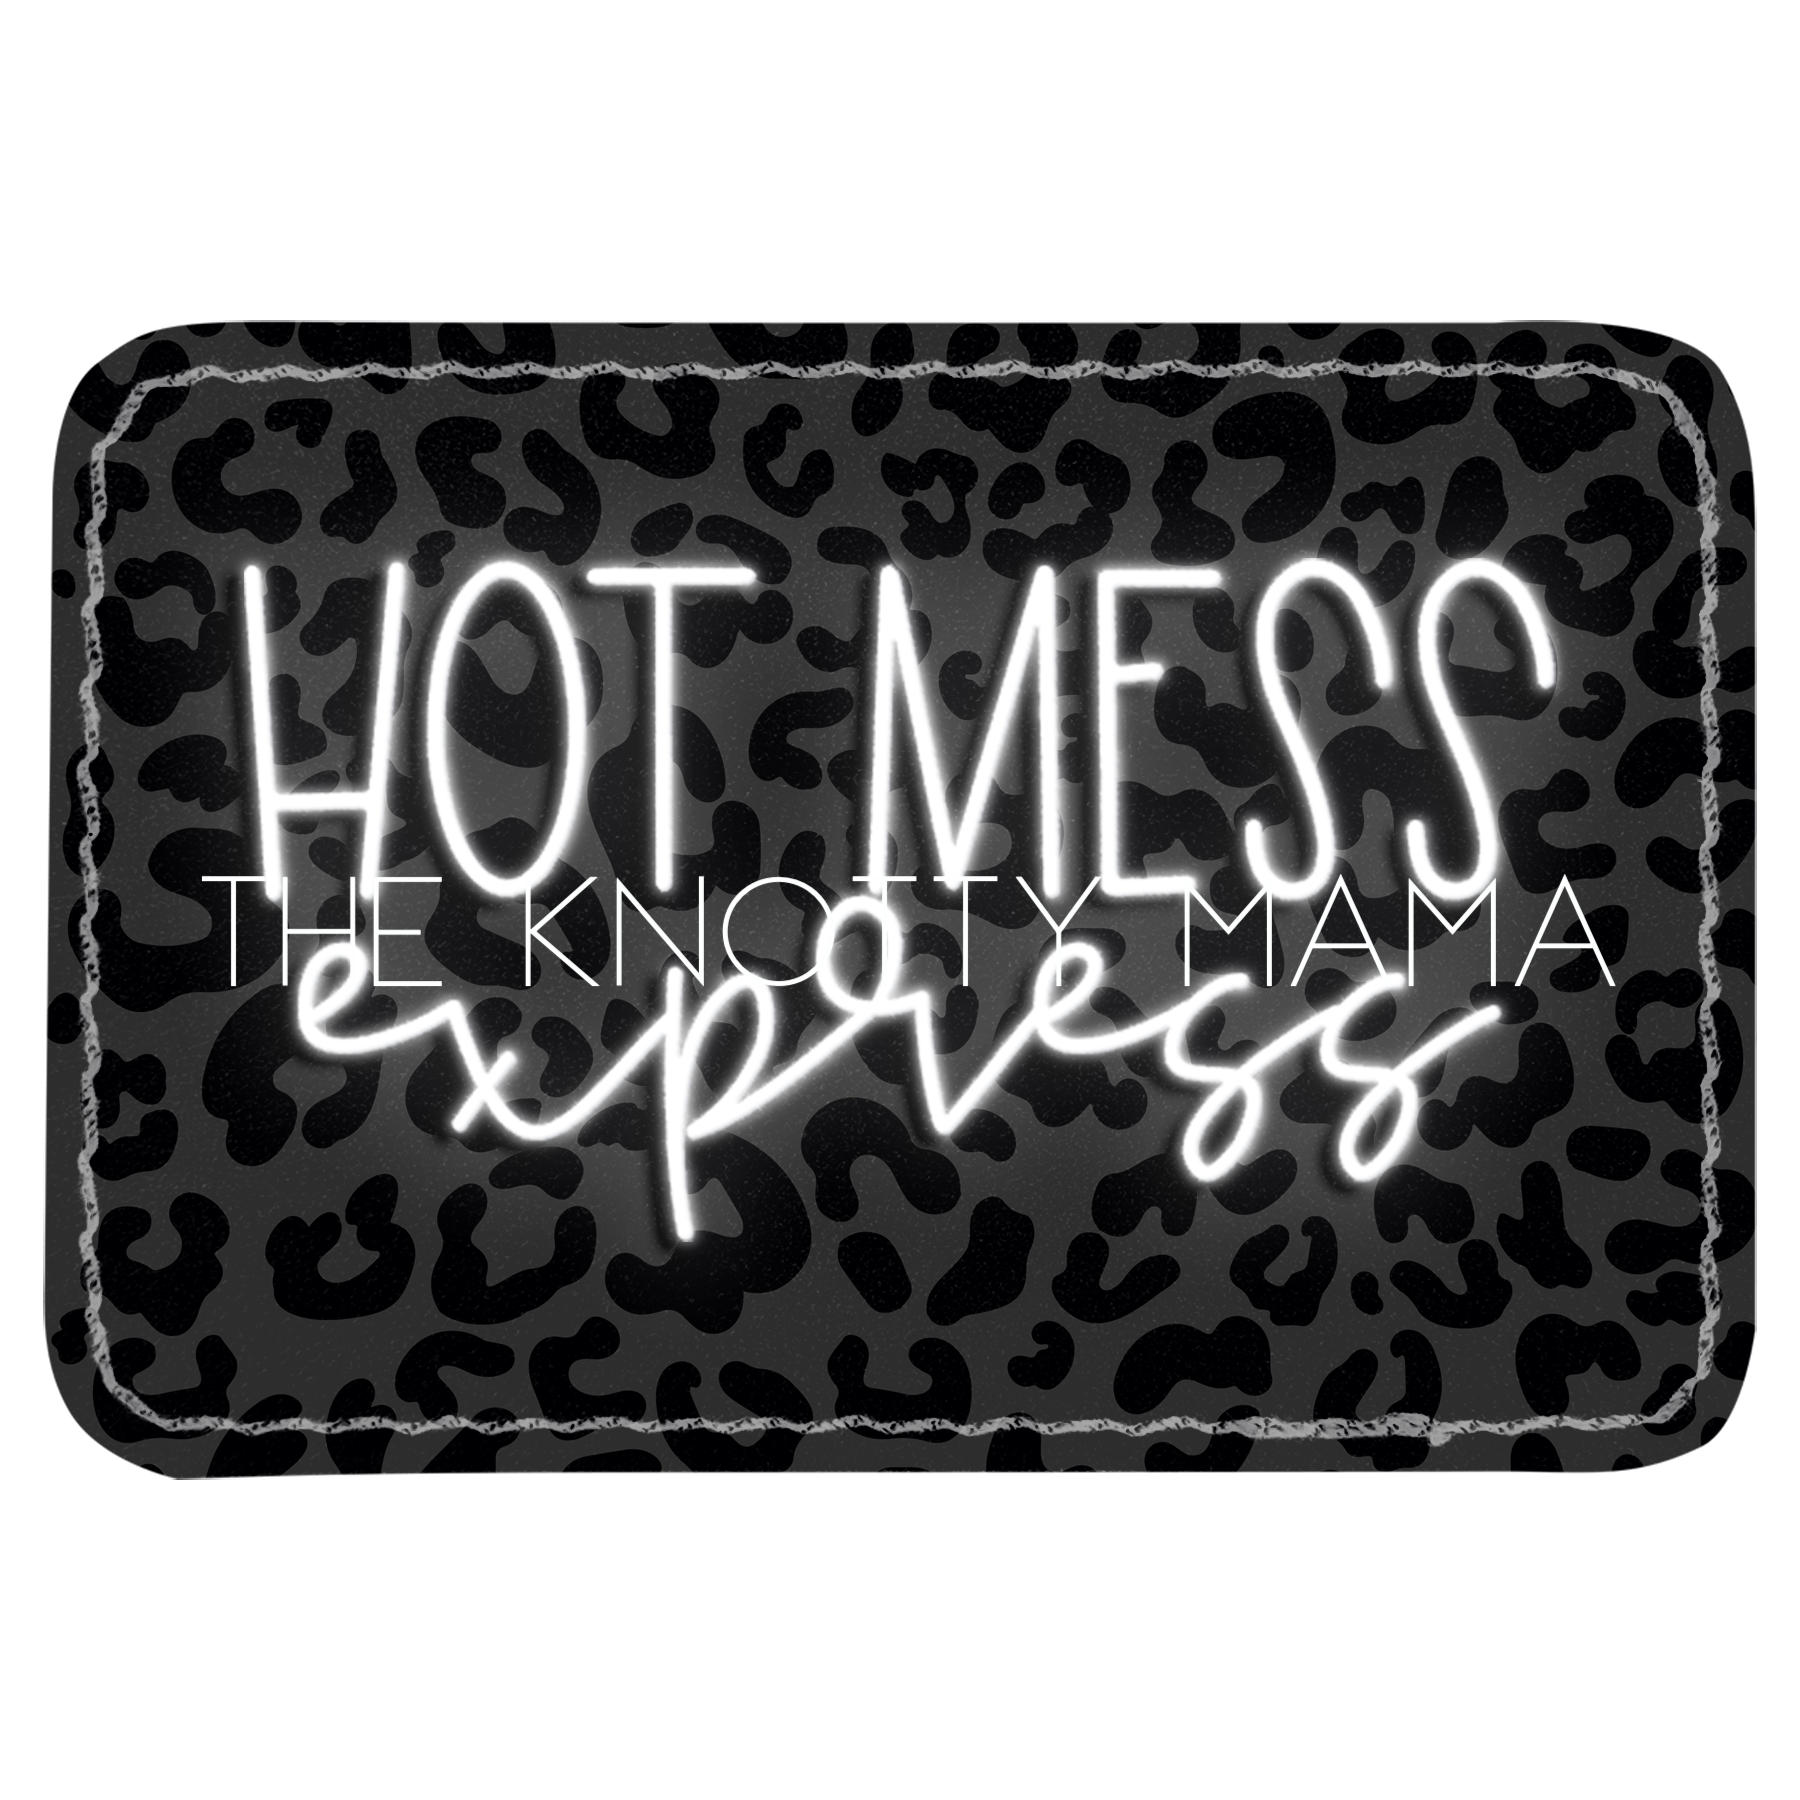 Neon Hot Mess Express Patch